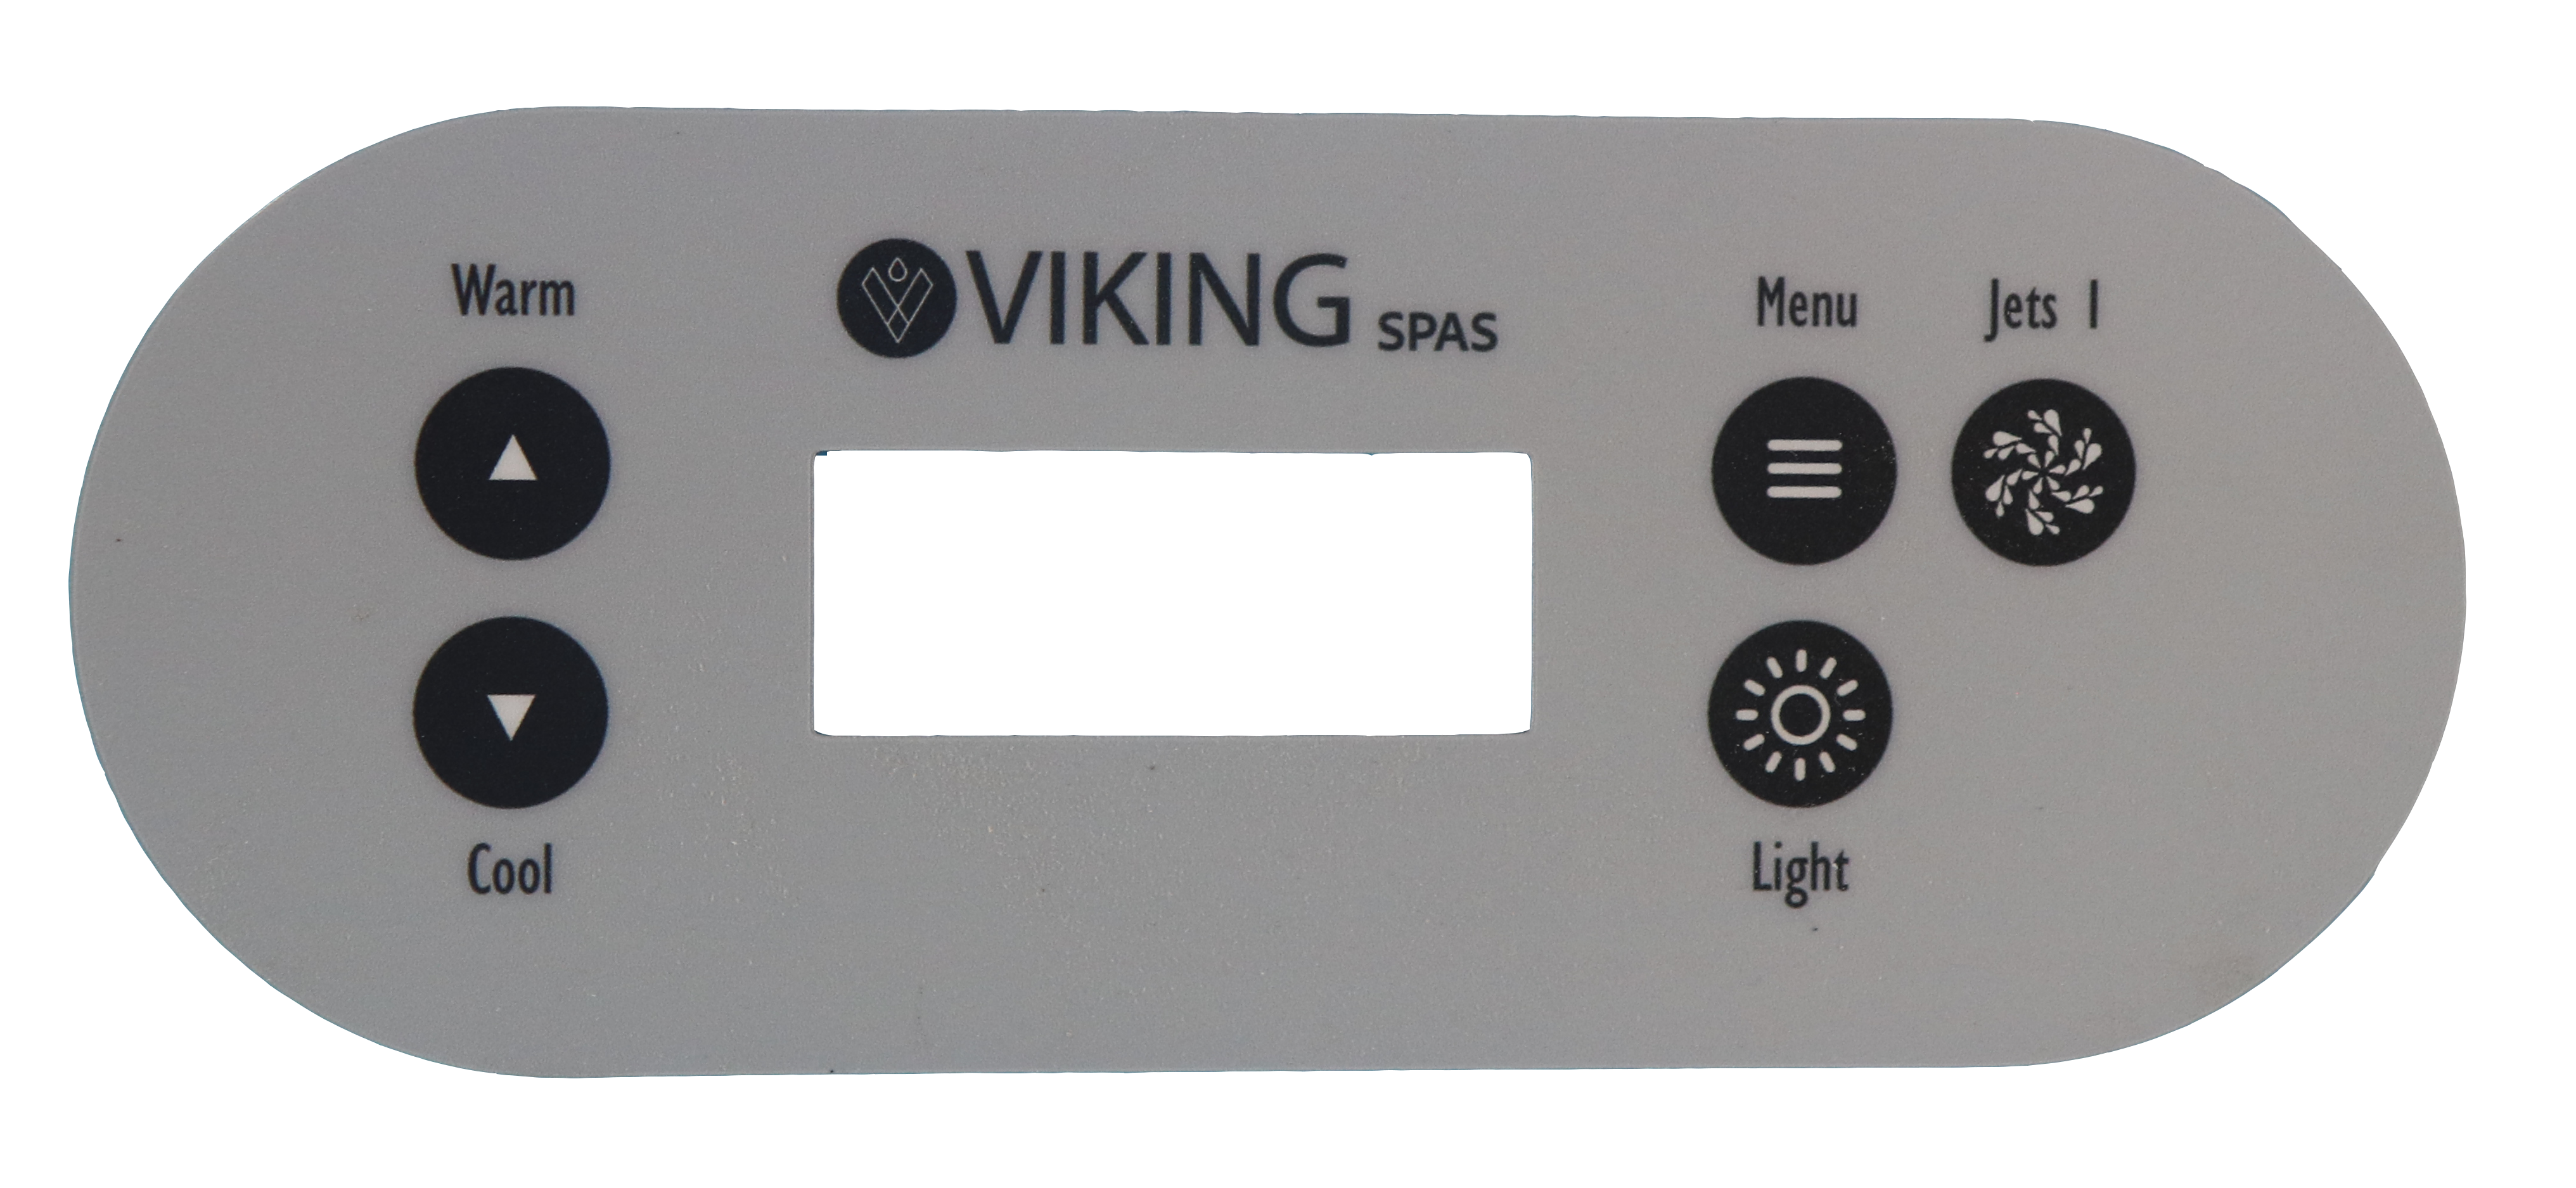 vikingspas.com